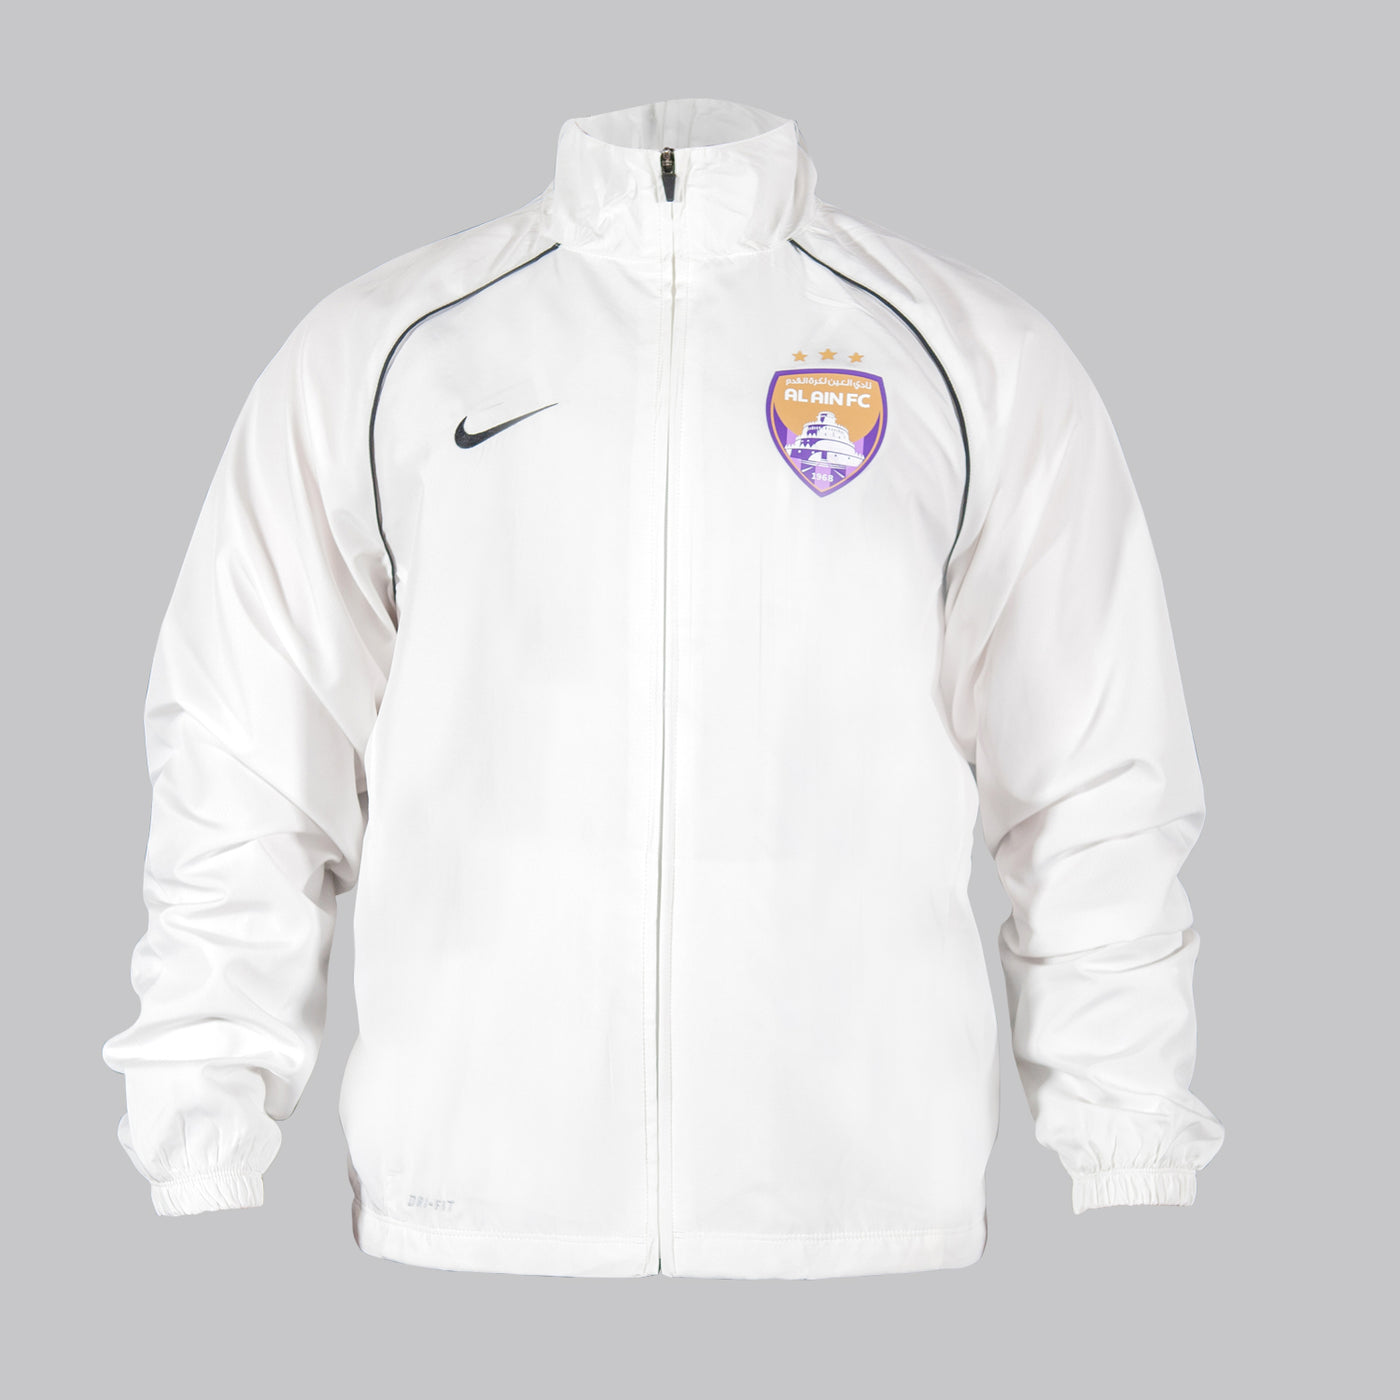 Al Ain FC Adults White Jacket